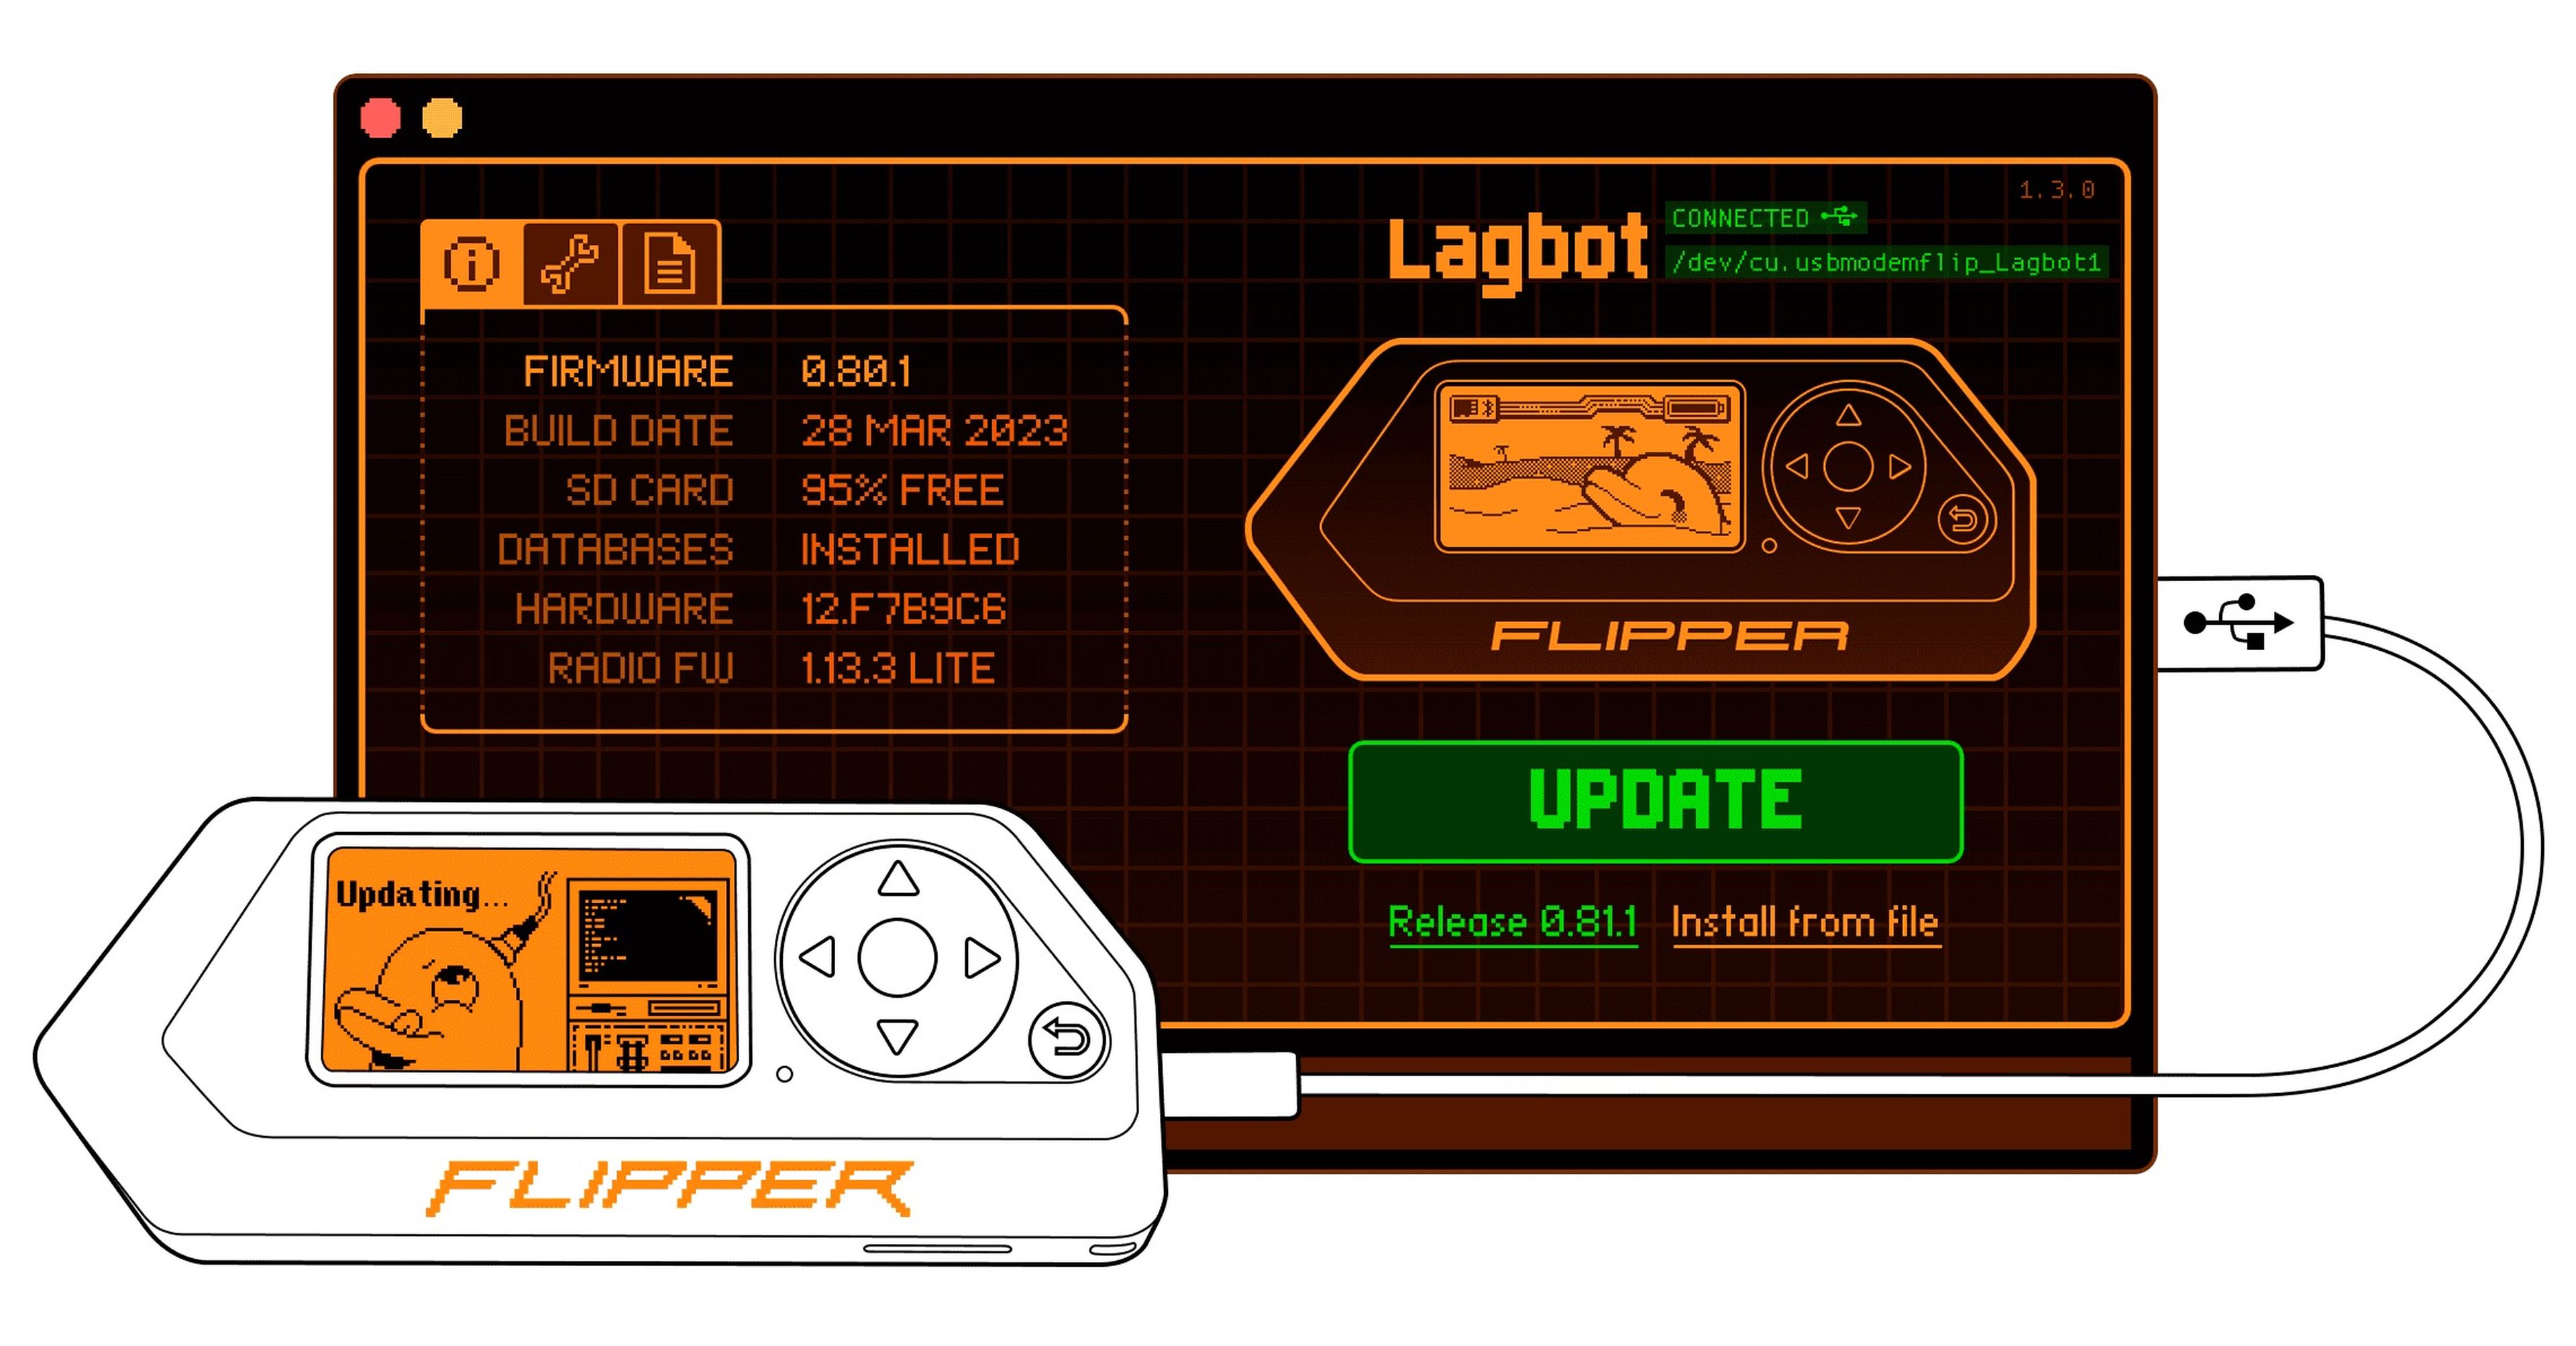 Flipper Zero, Naranja y blanco. : : Informática